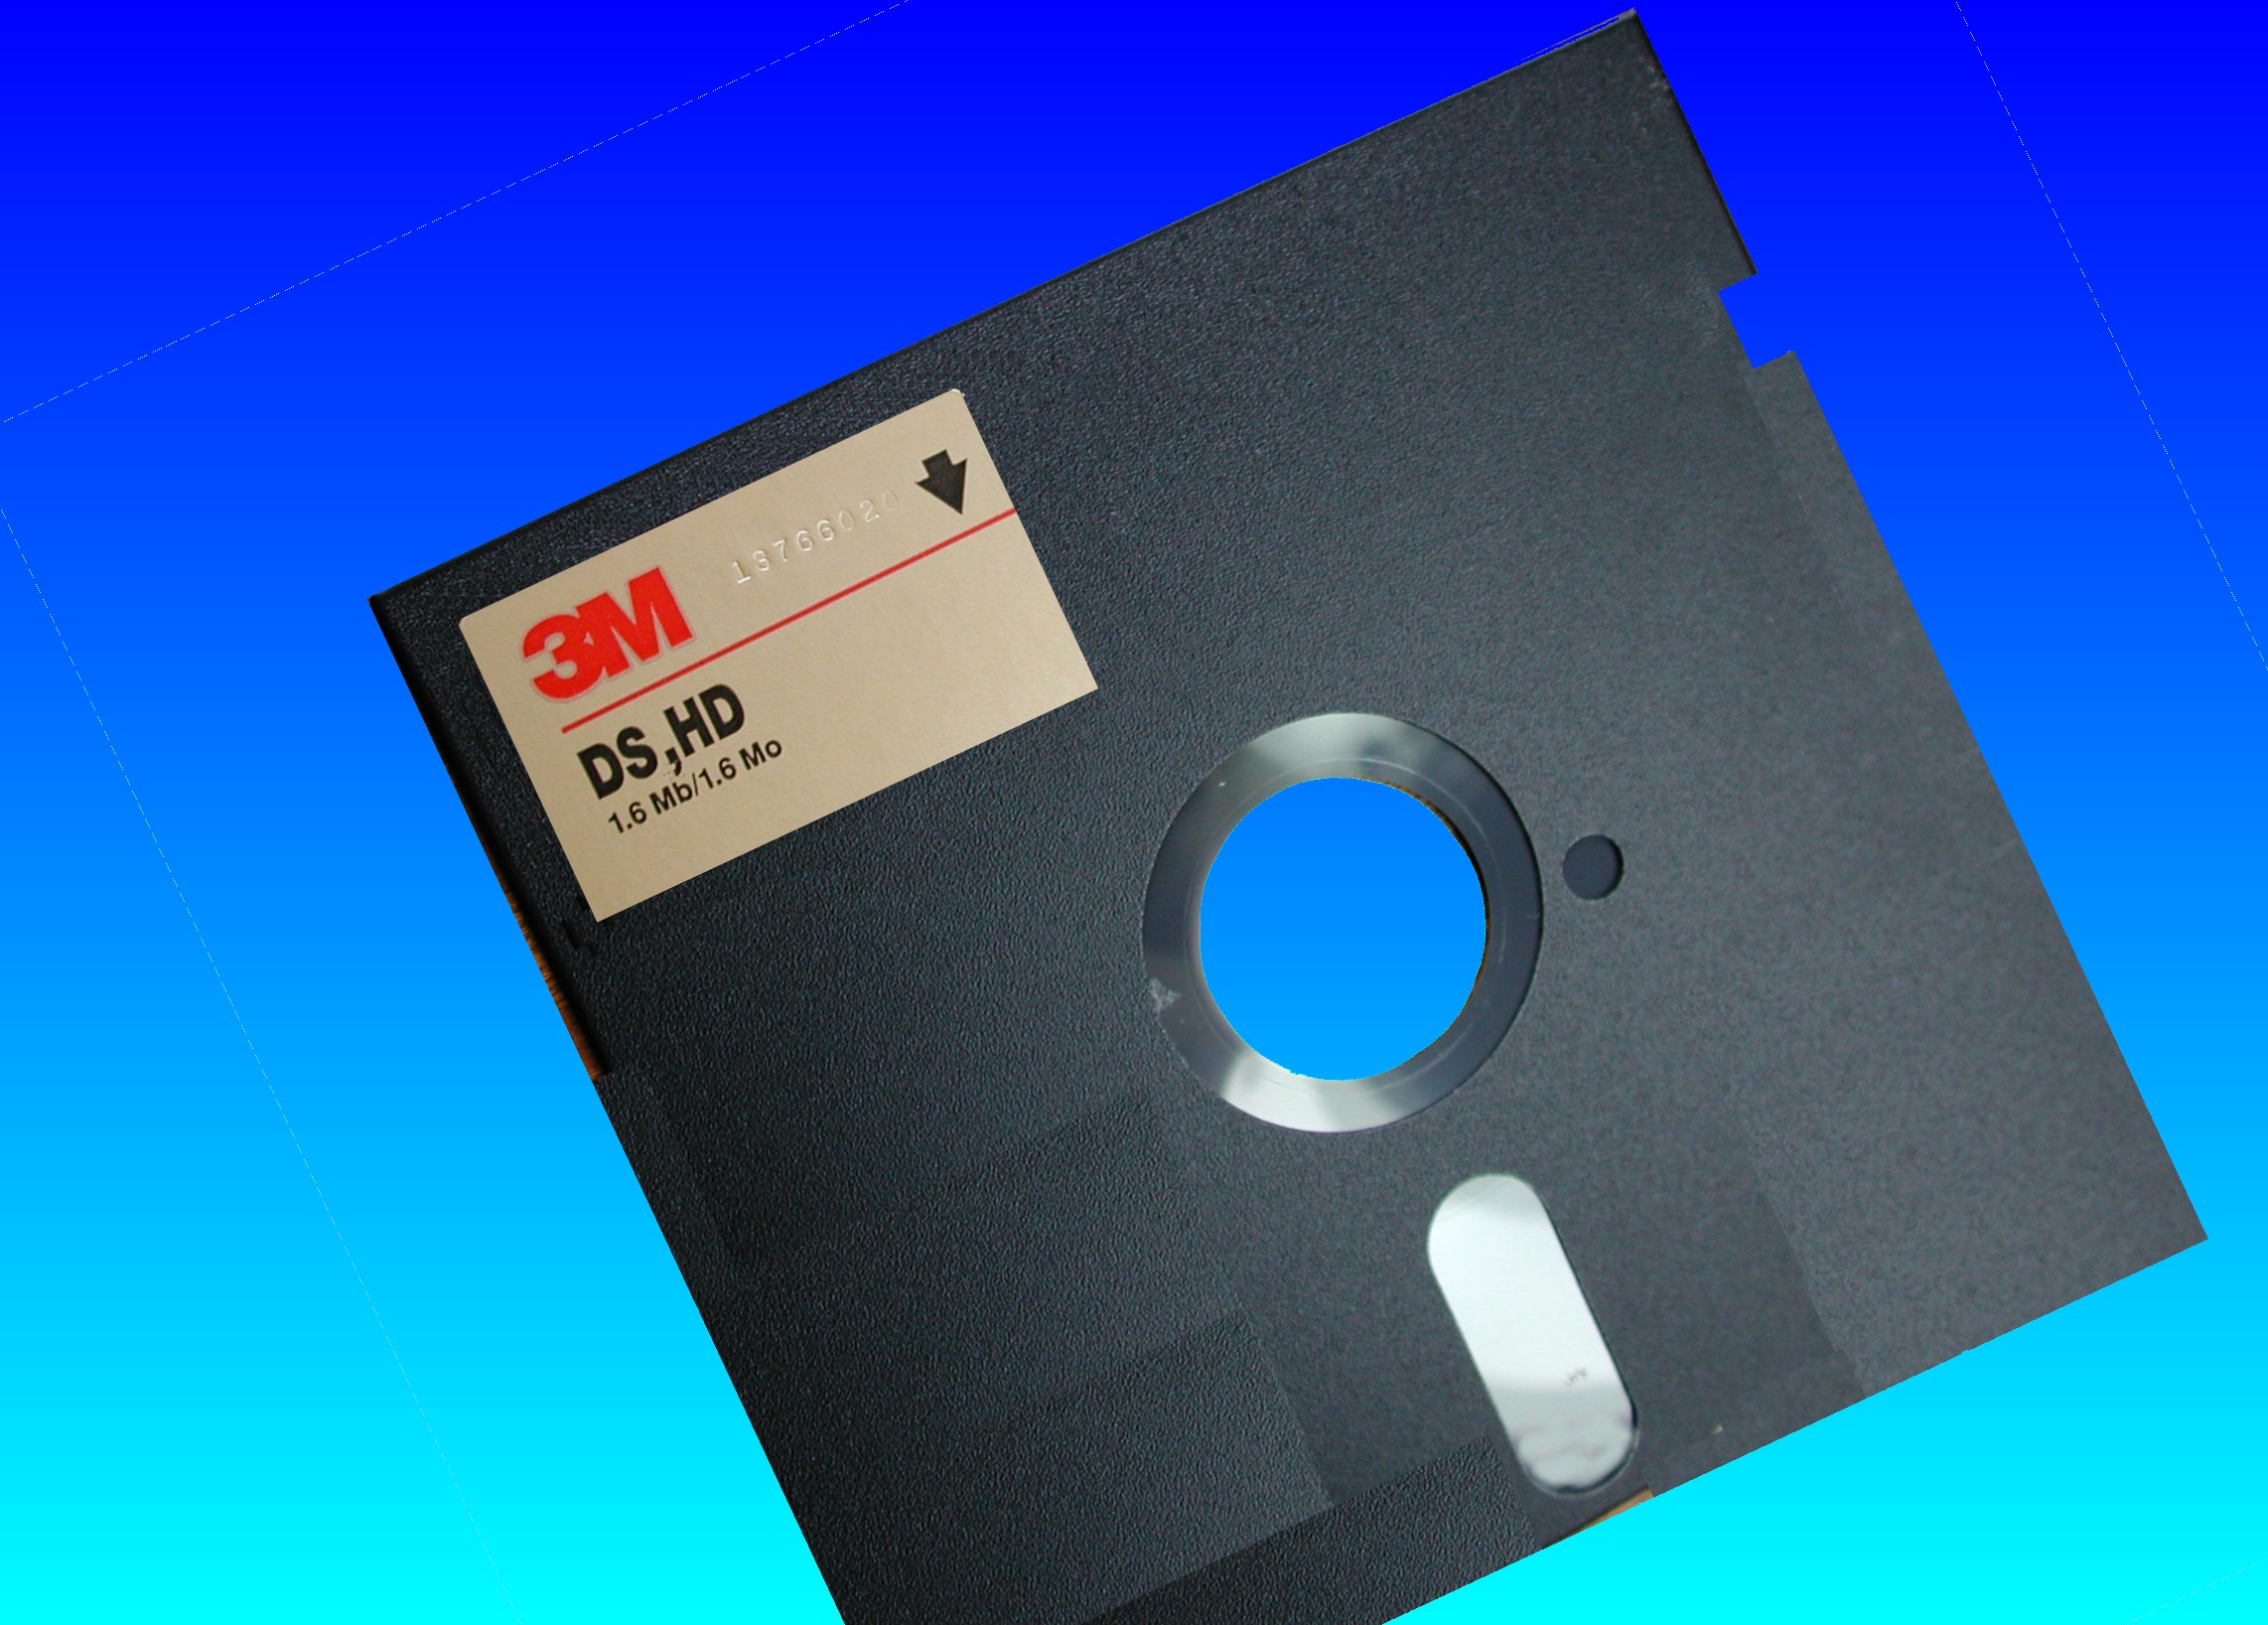 1.44 mb floppy disk image creator